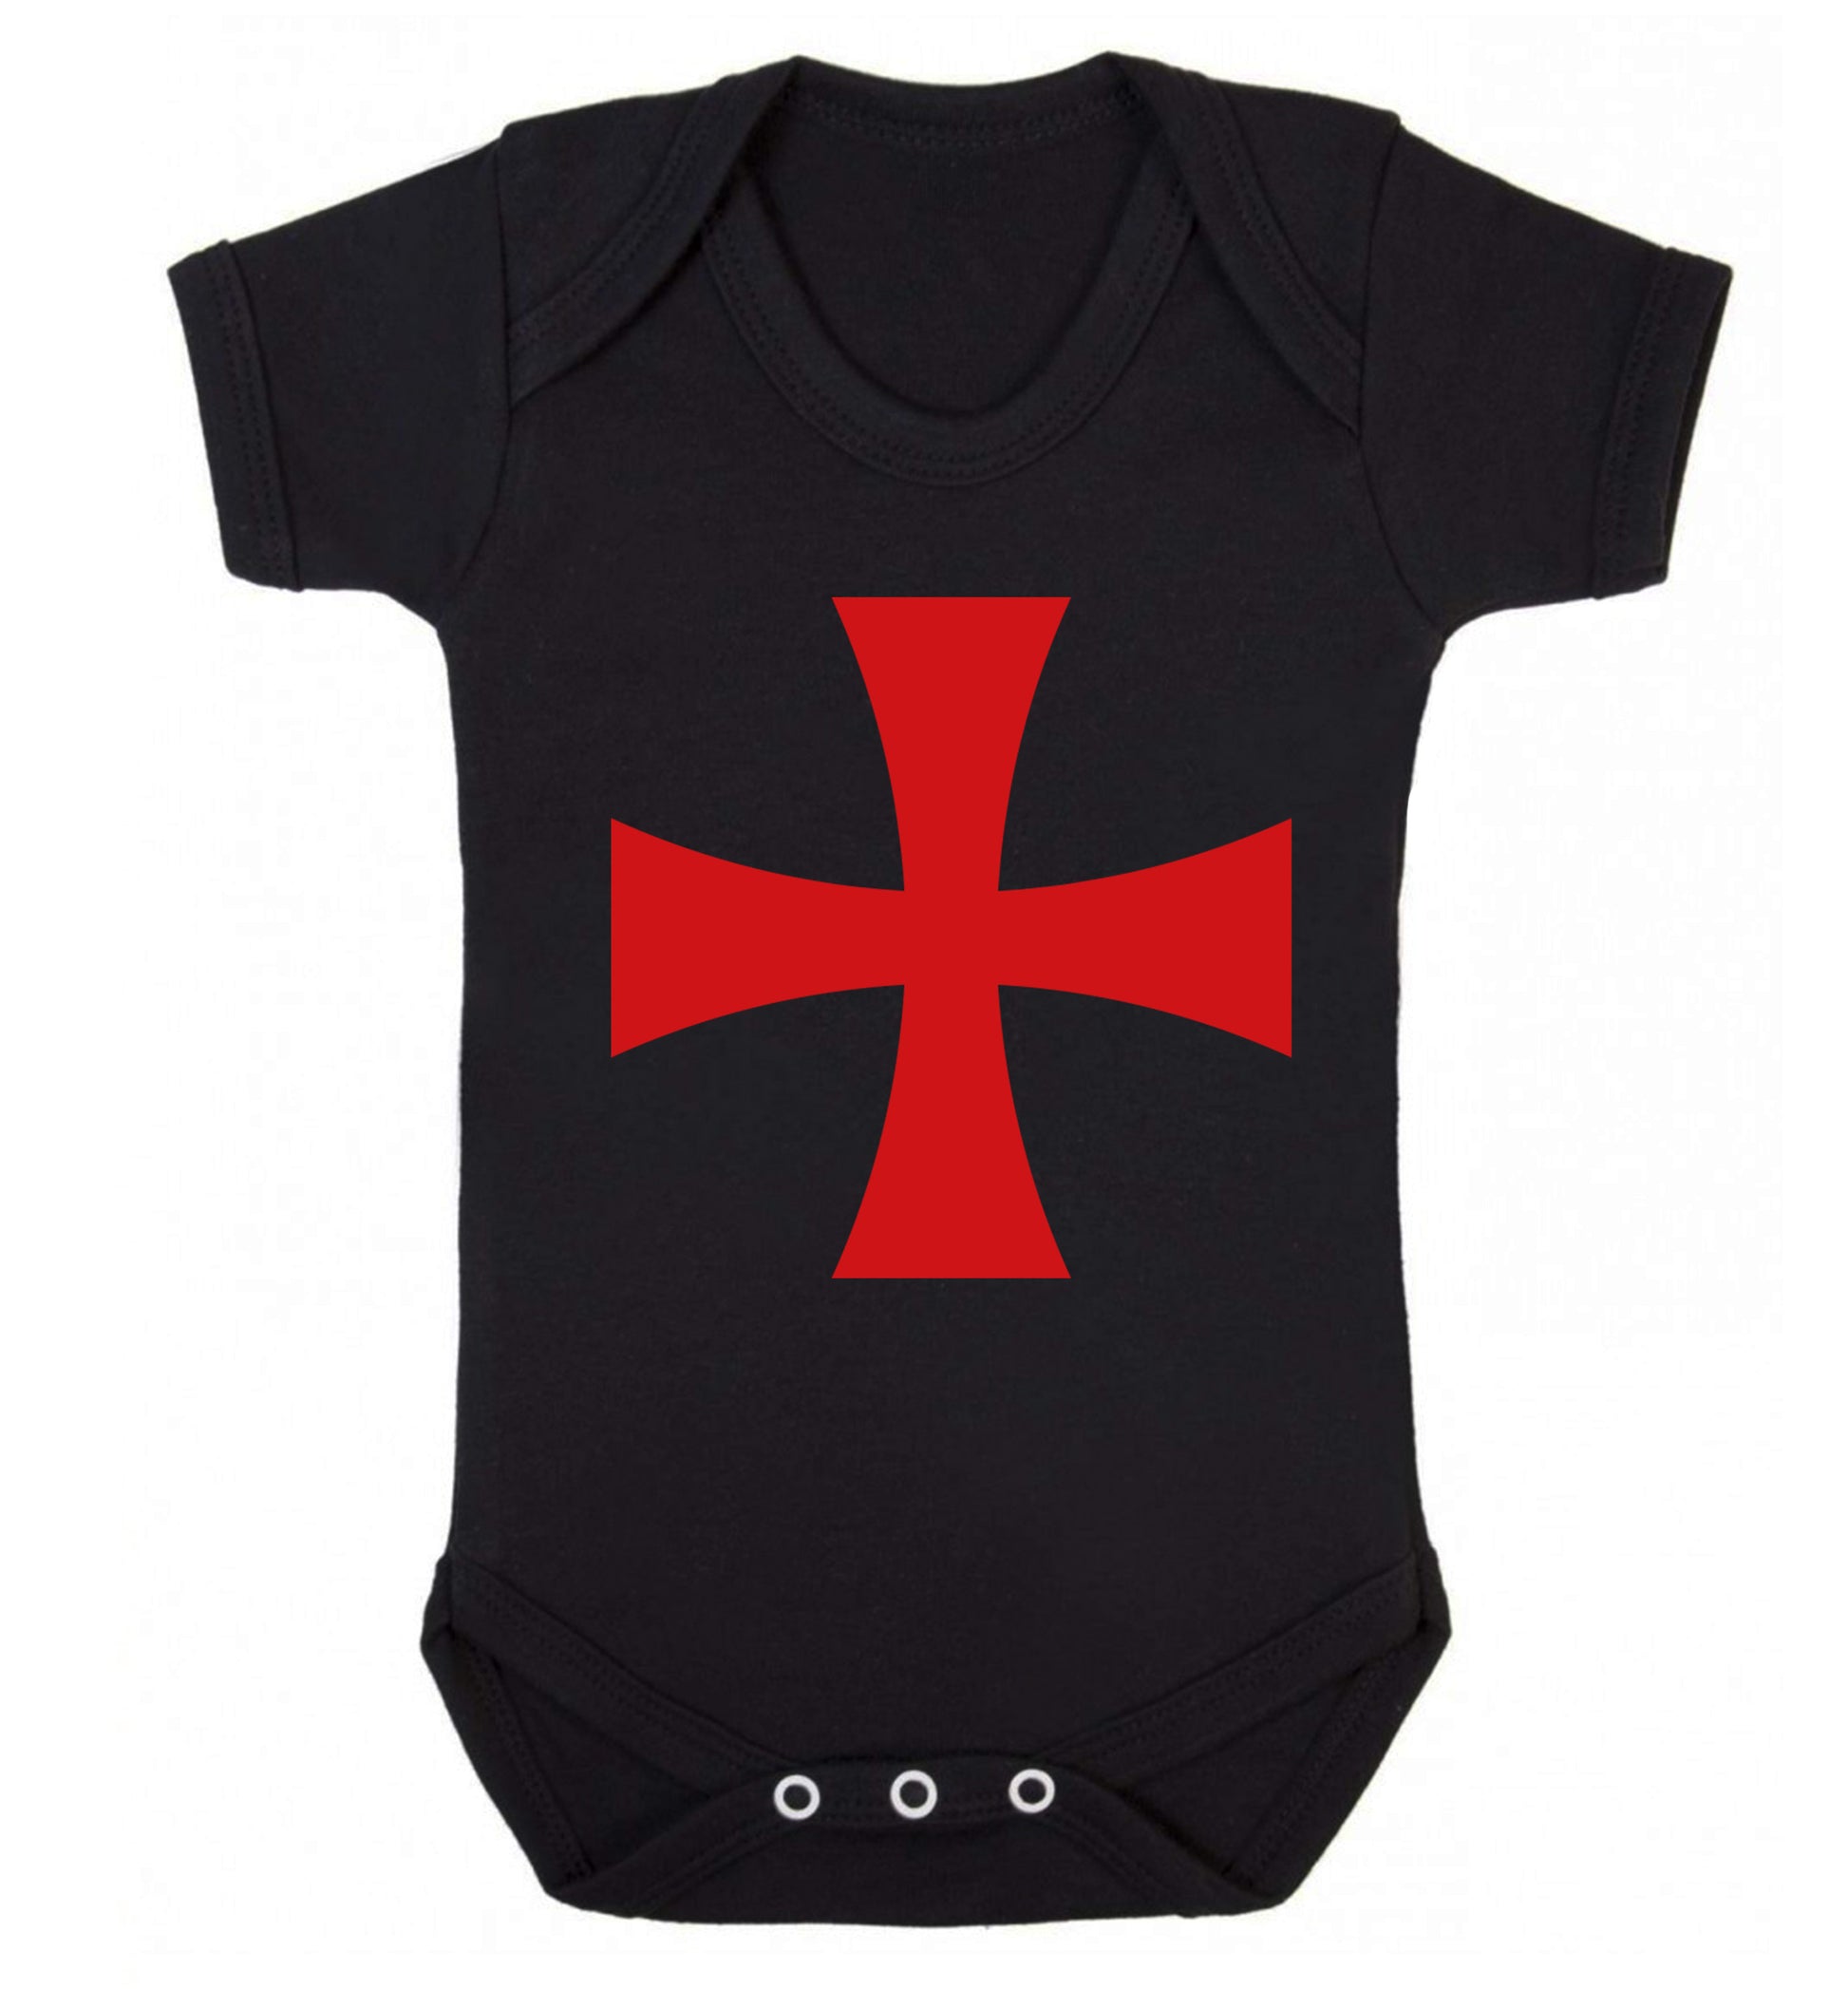 Knights Templar cross Baby Vest black 18-24 months